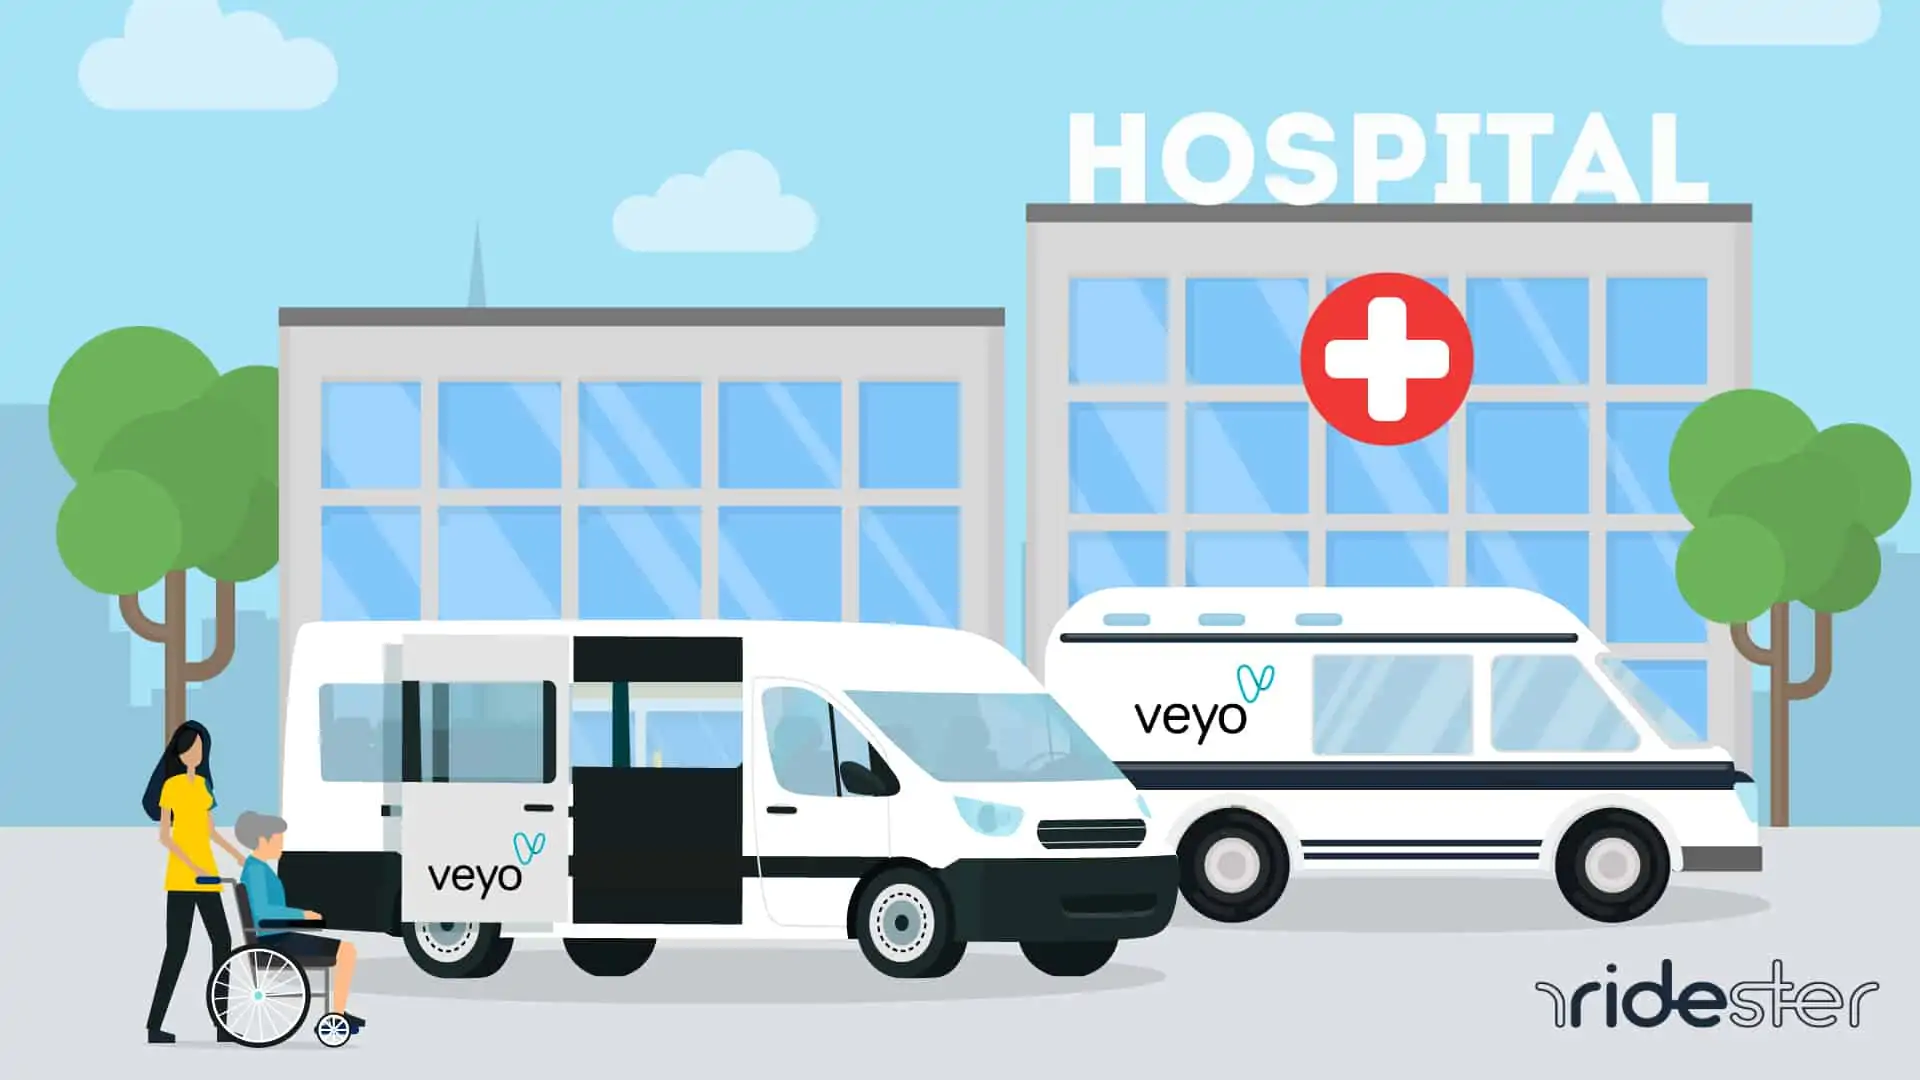 vector image showing Veyo driver pushing patient into Veyo van